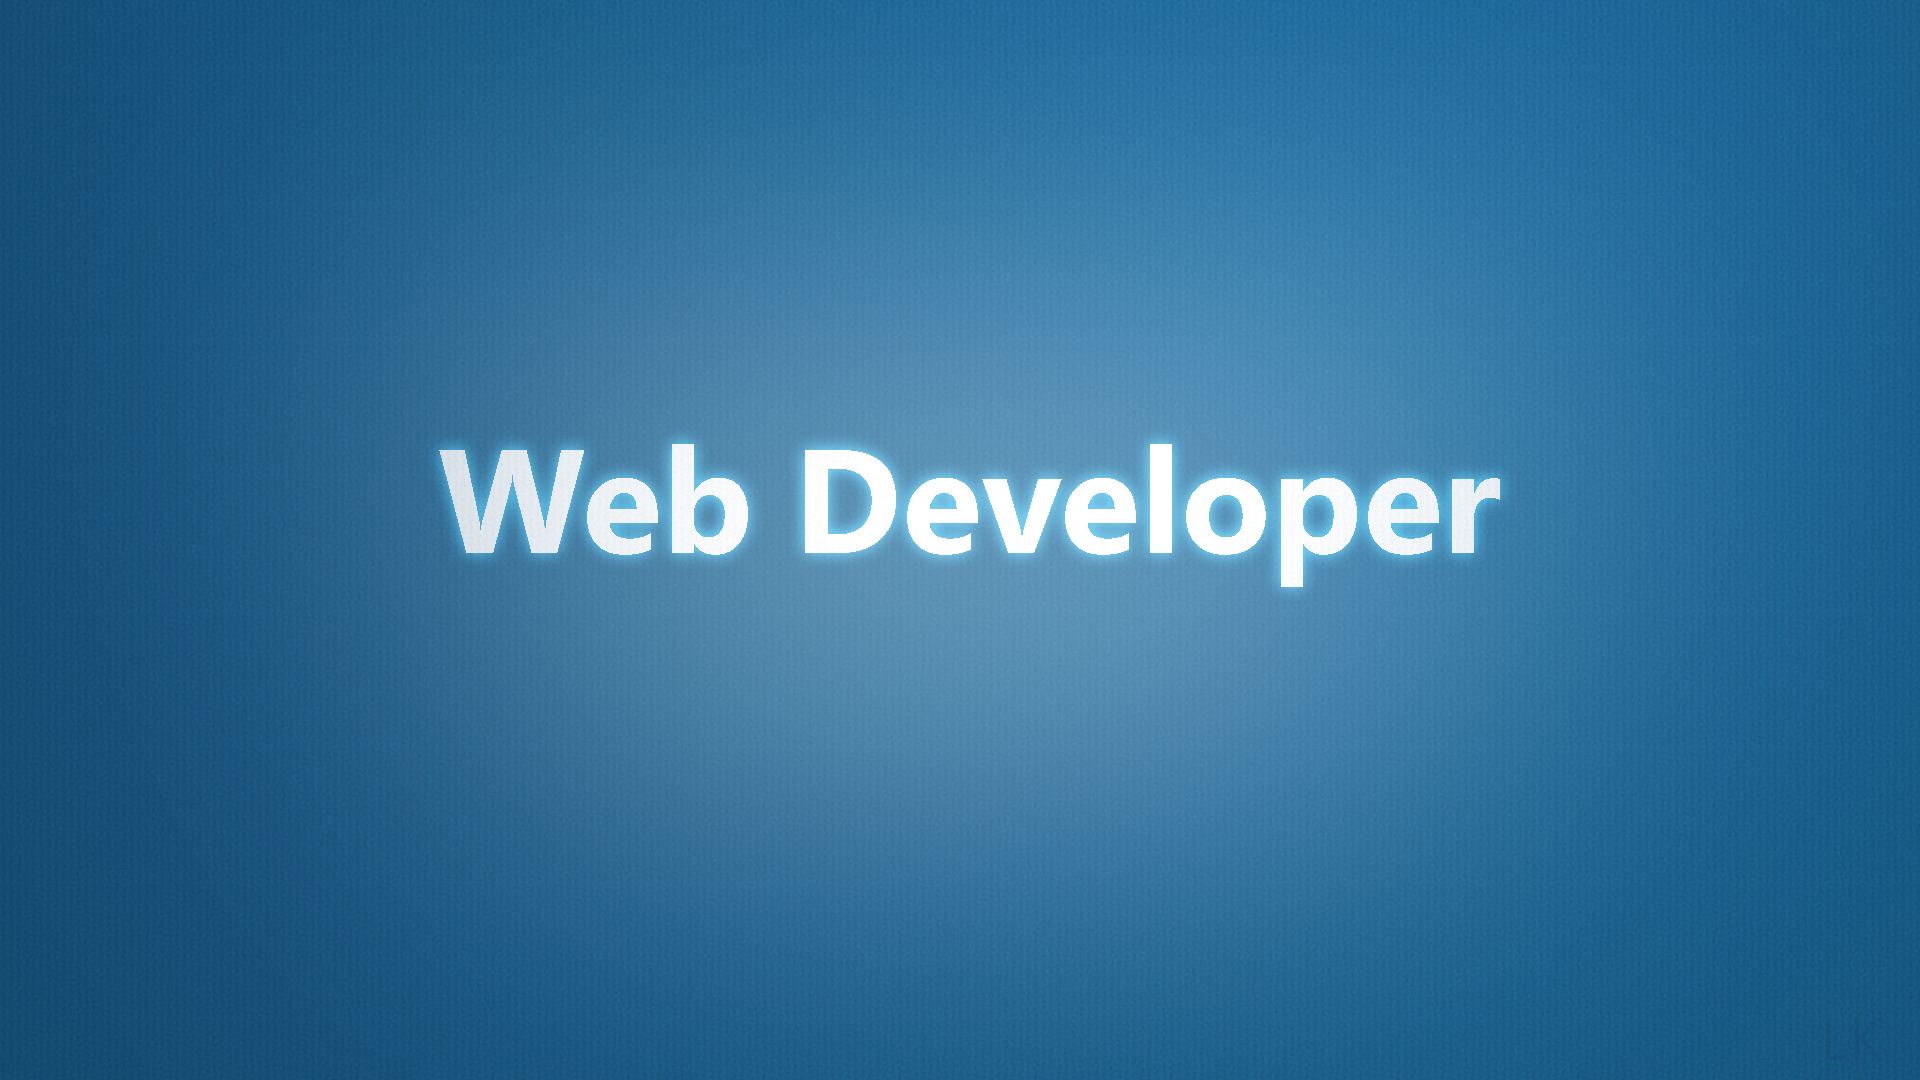 Web Developer Background Image